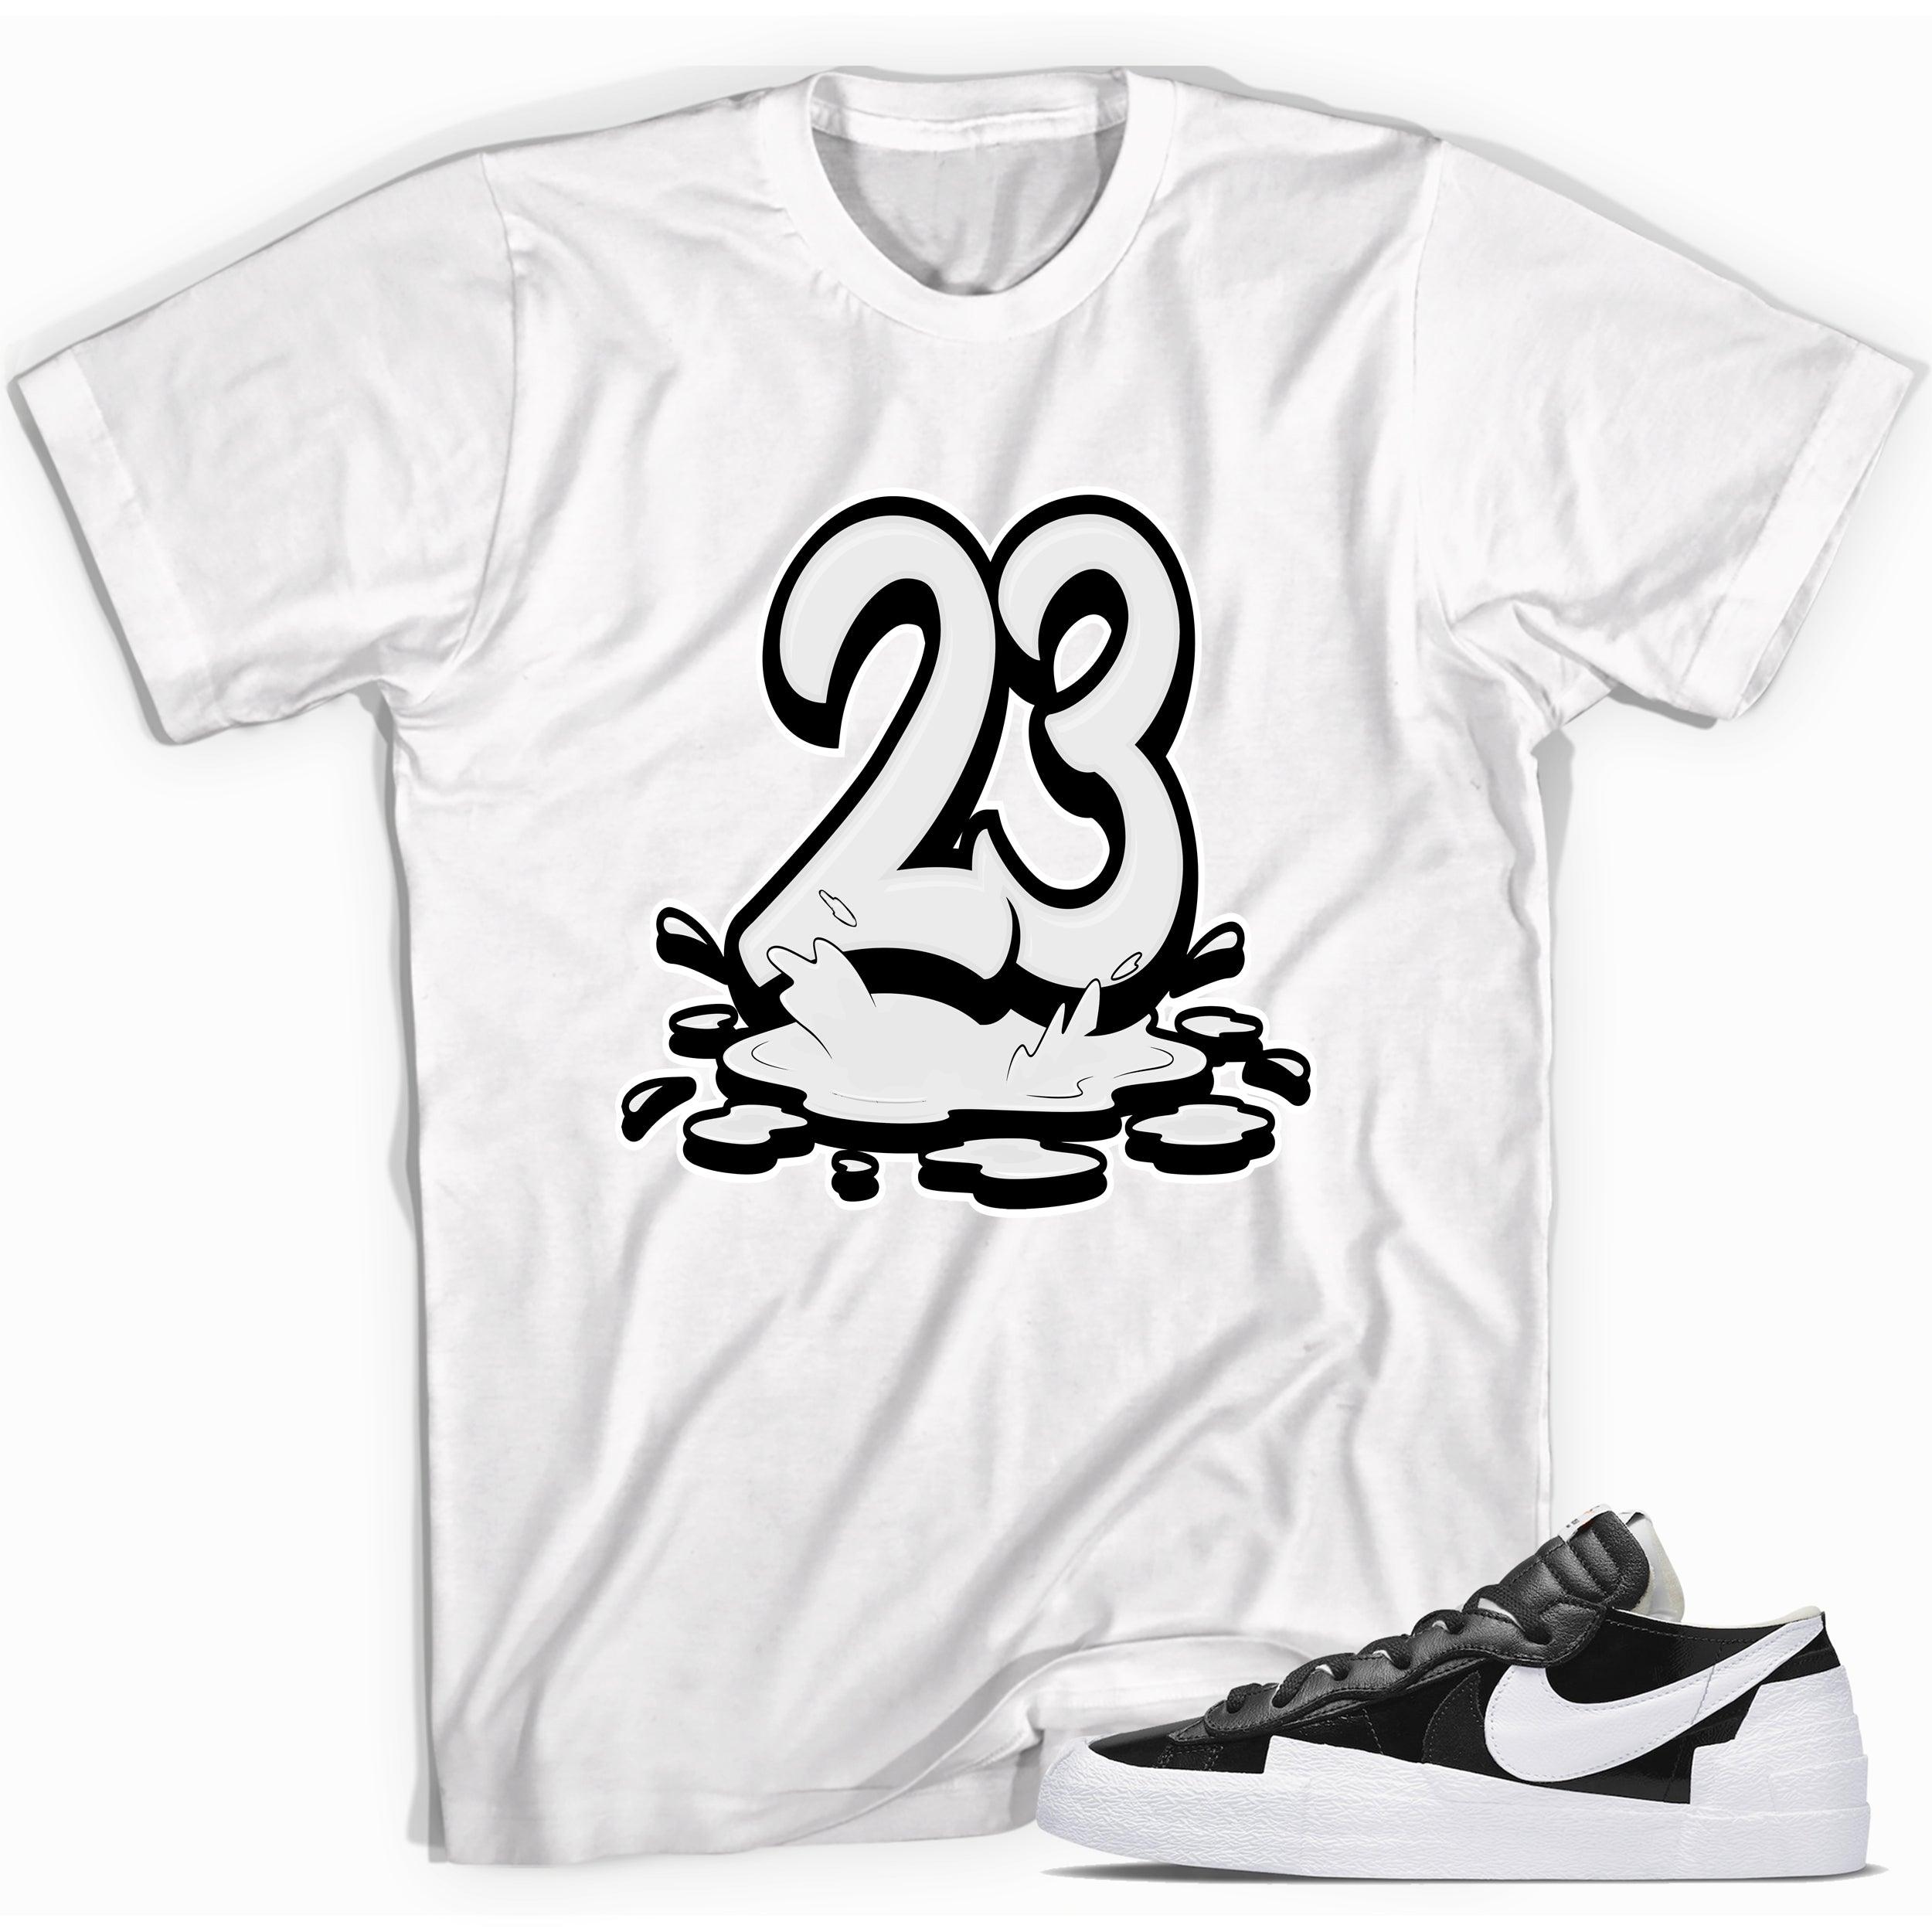 23 Melting T-Shirt Nike Blazer Low Sacai Black Patent Leather photo